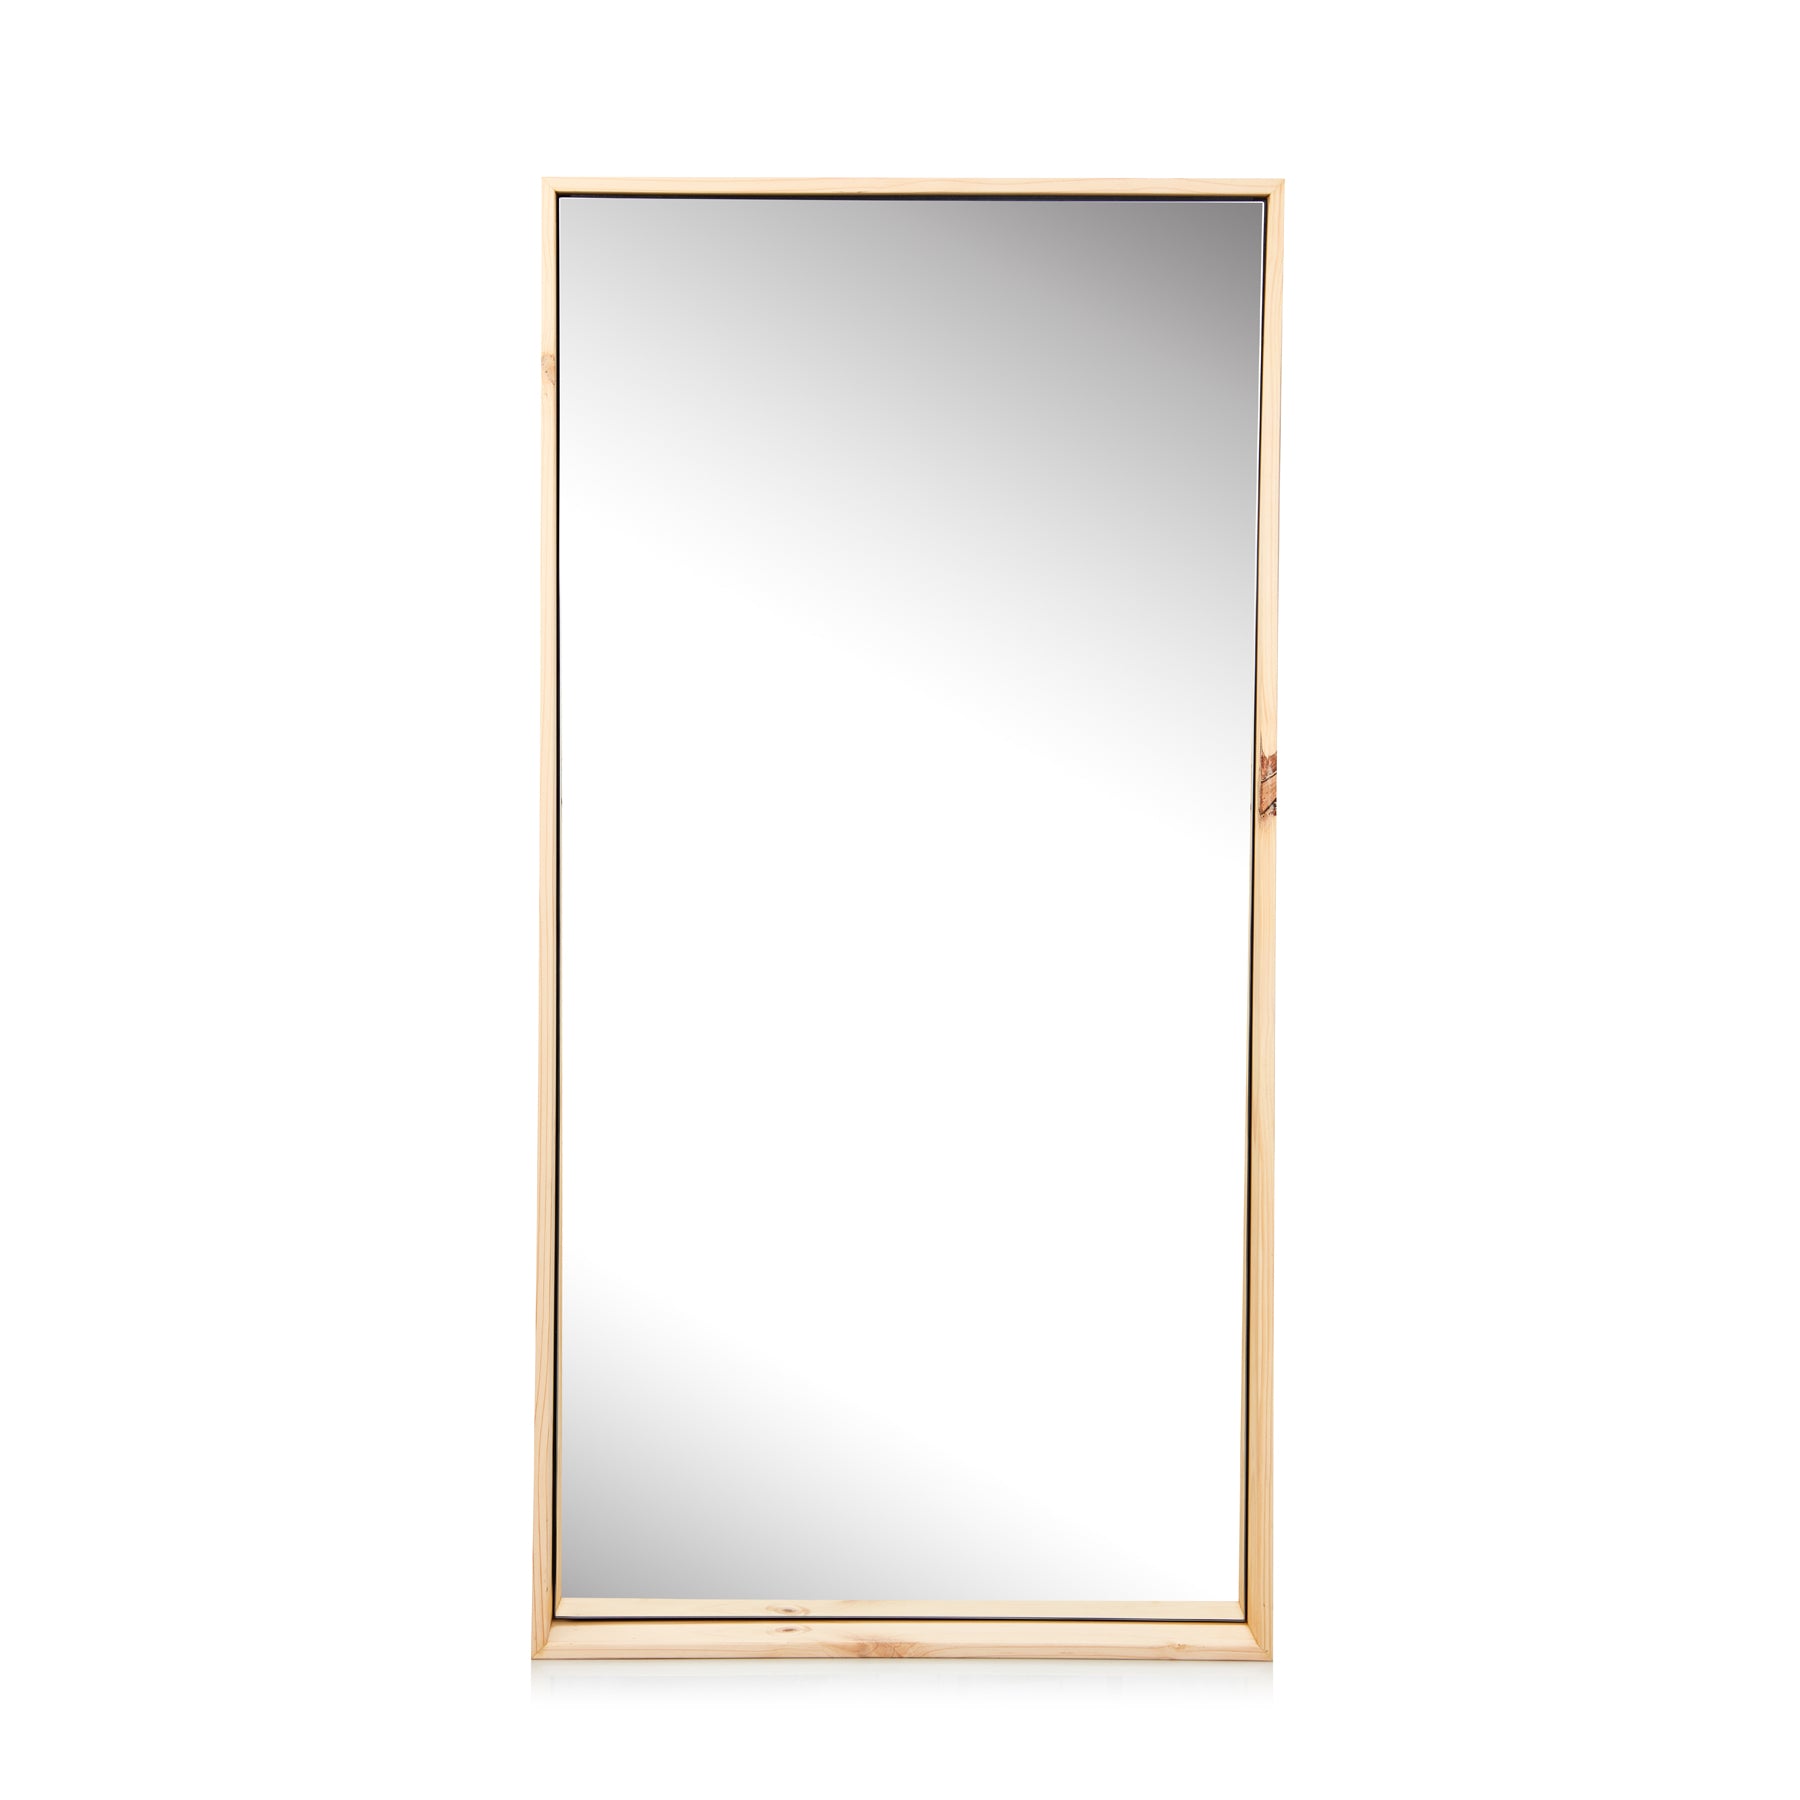 Jupiter Leaning Mirror - Natural Finish - Paramount Mirrors and Prints